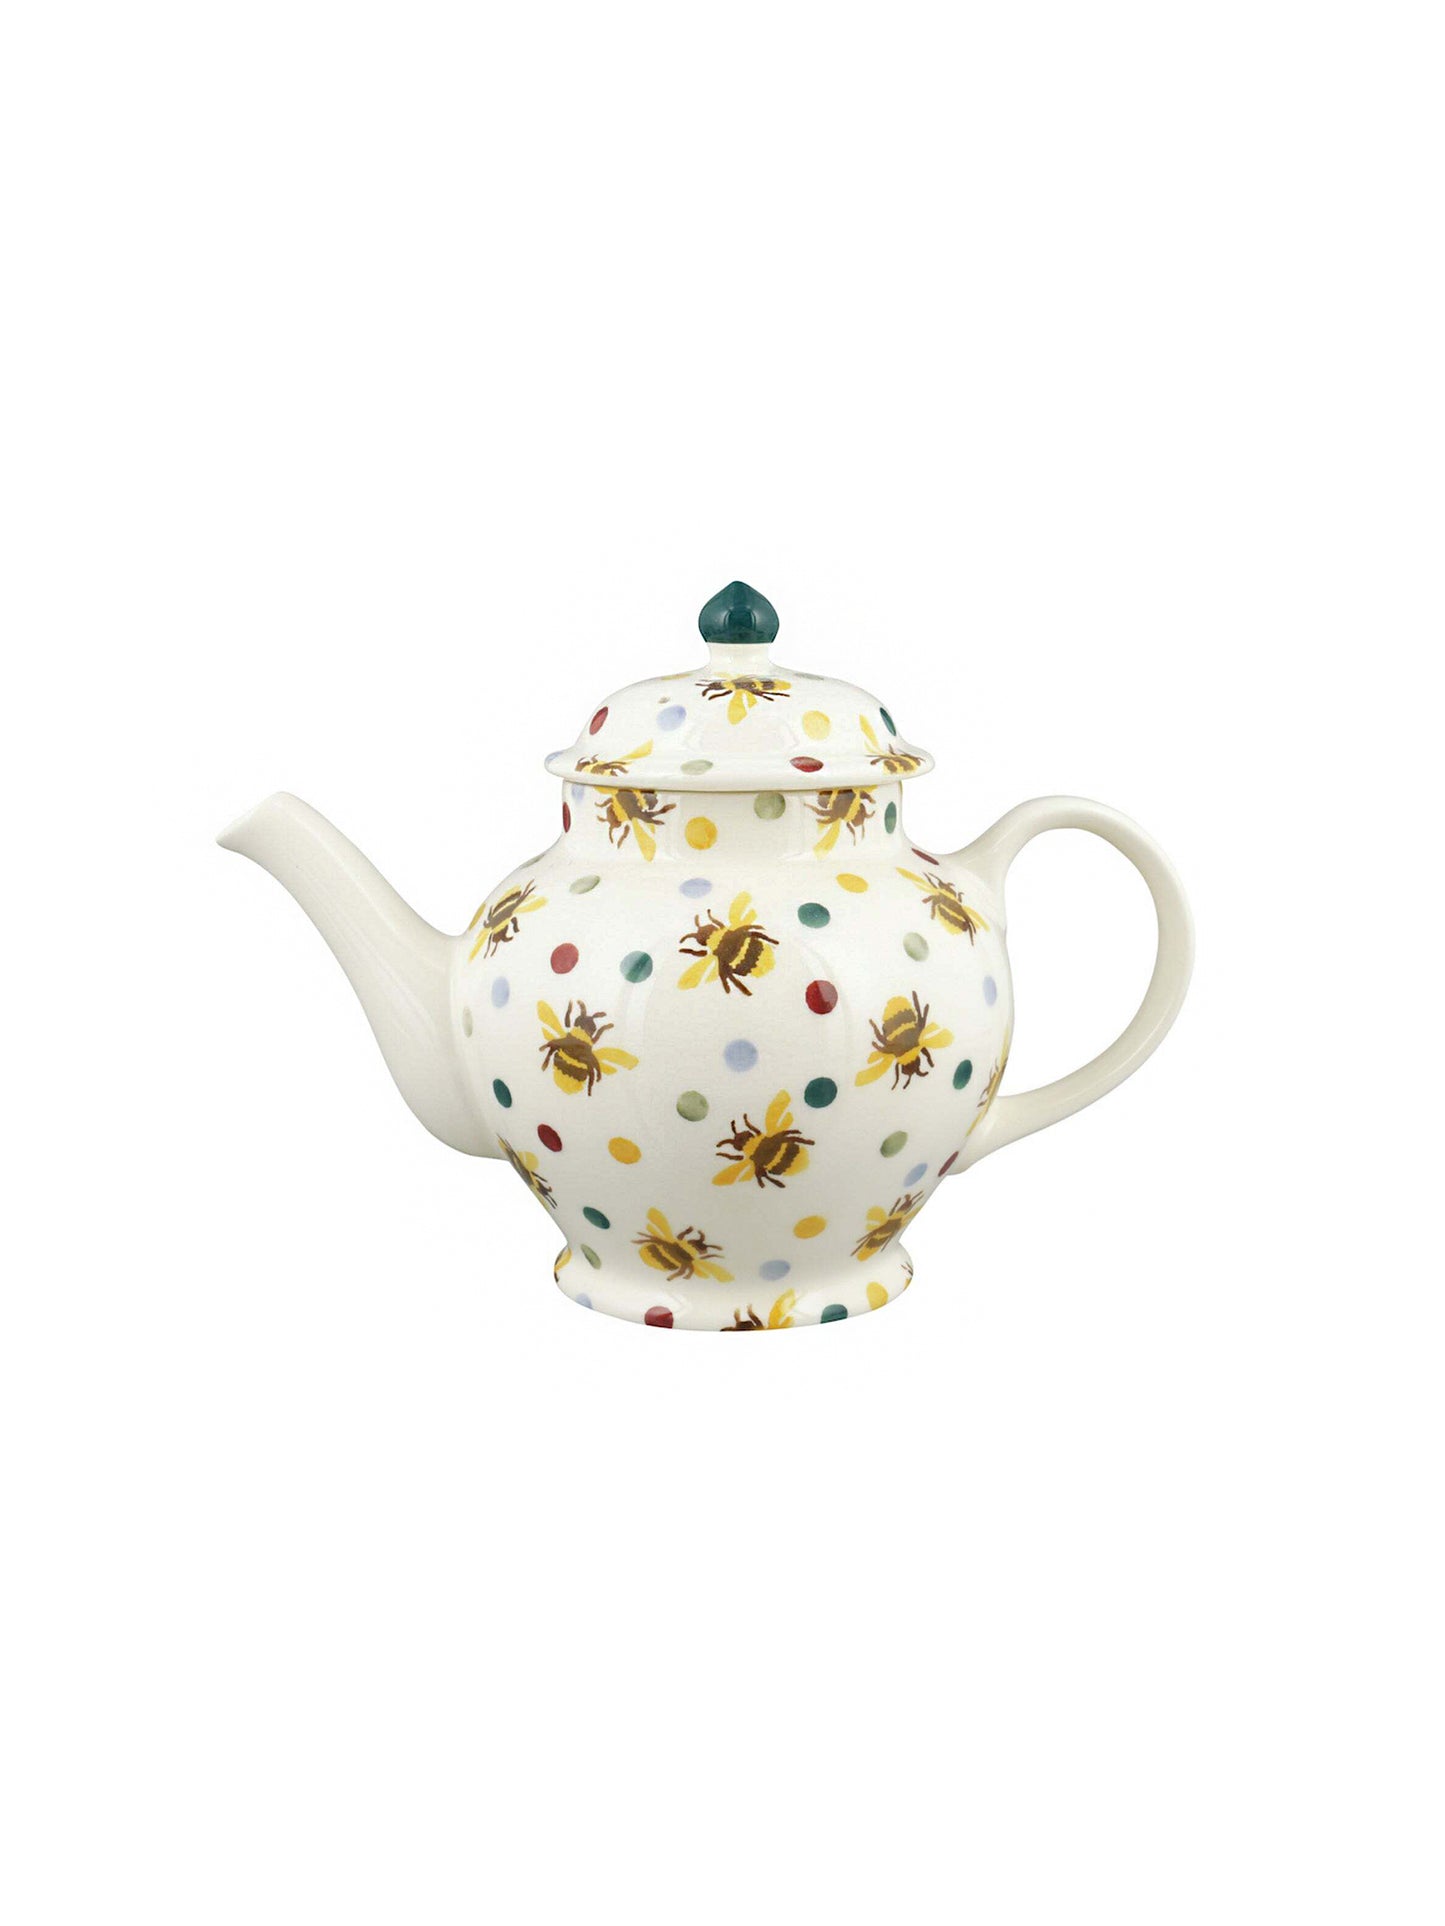 Emma Bridgewater Bumblebee & Small Polka Dot 3 Mug Teapot Weston Table